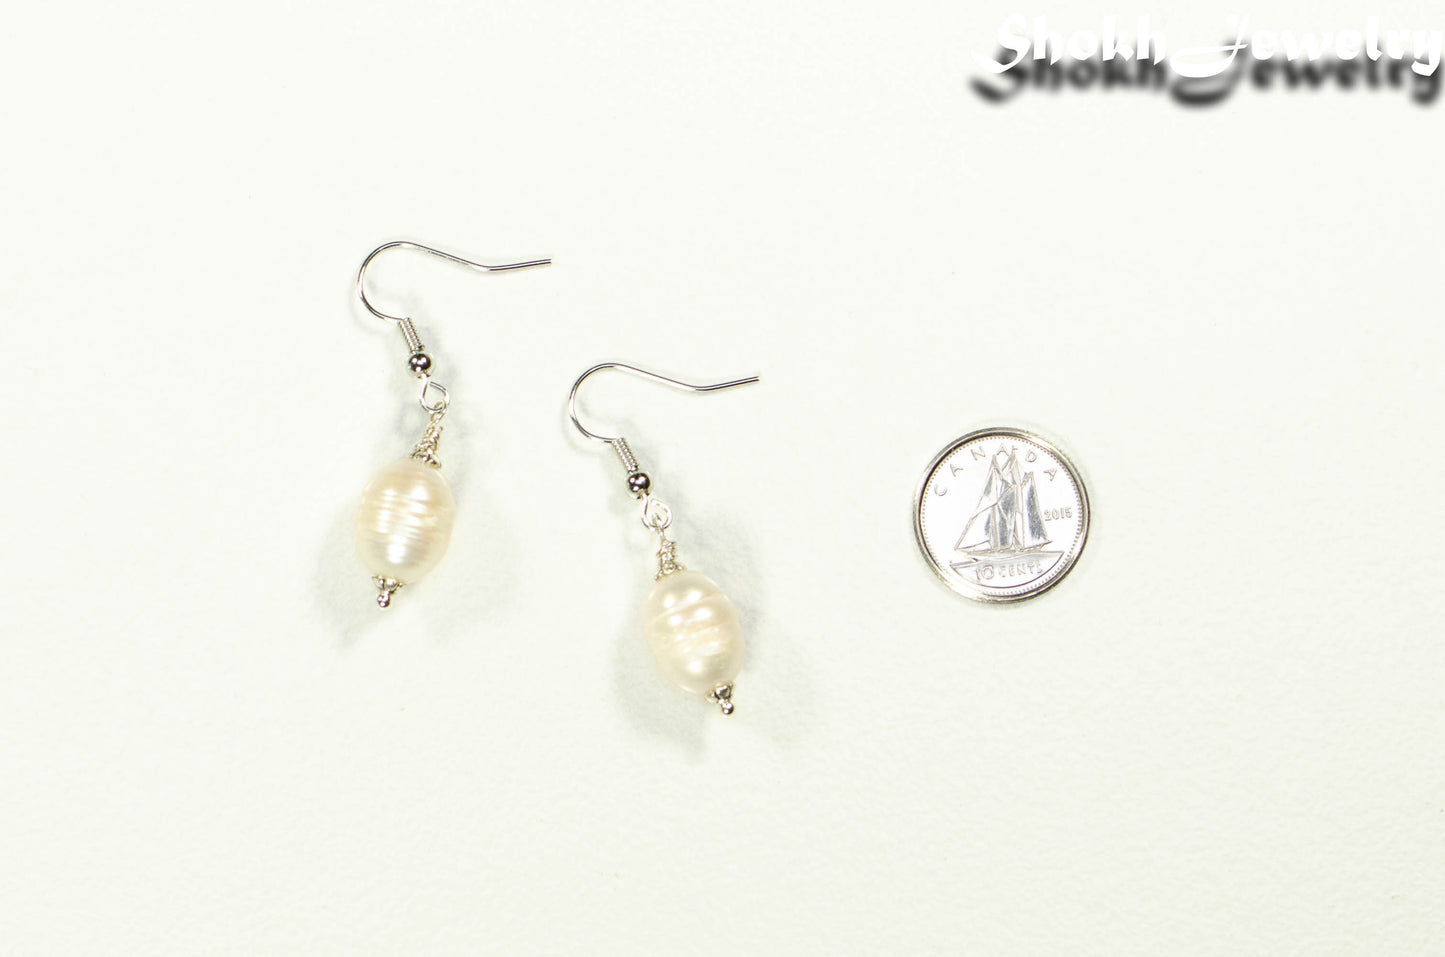 12mm Natural Freshwater Pearl Earrings beside a dime.